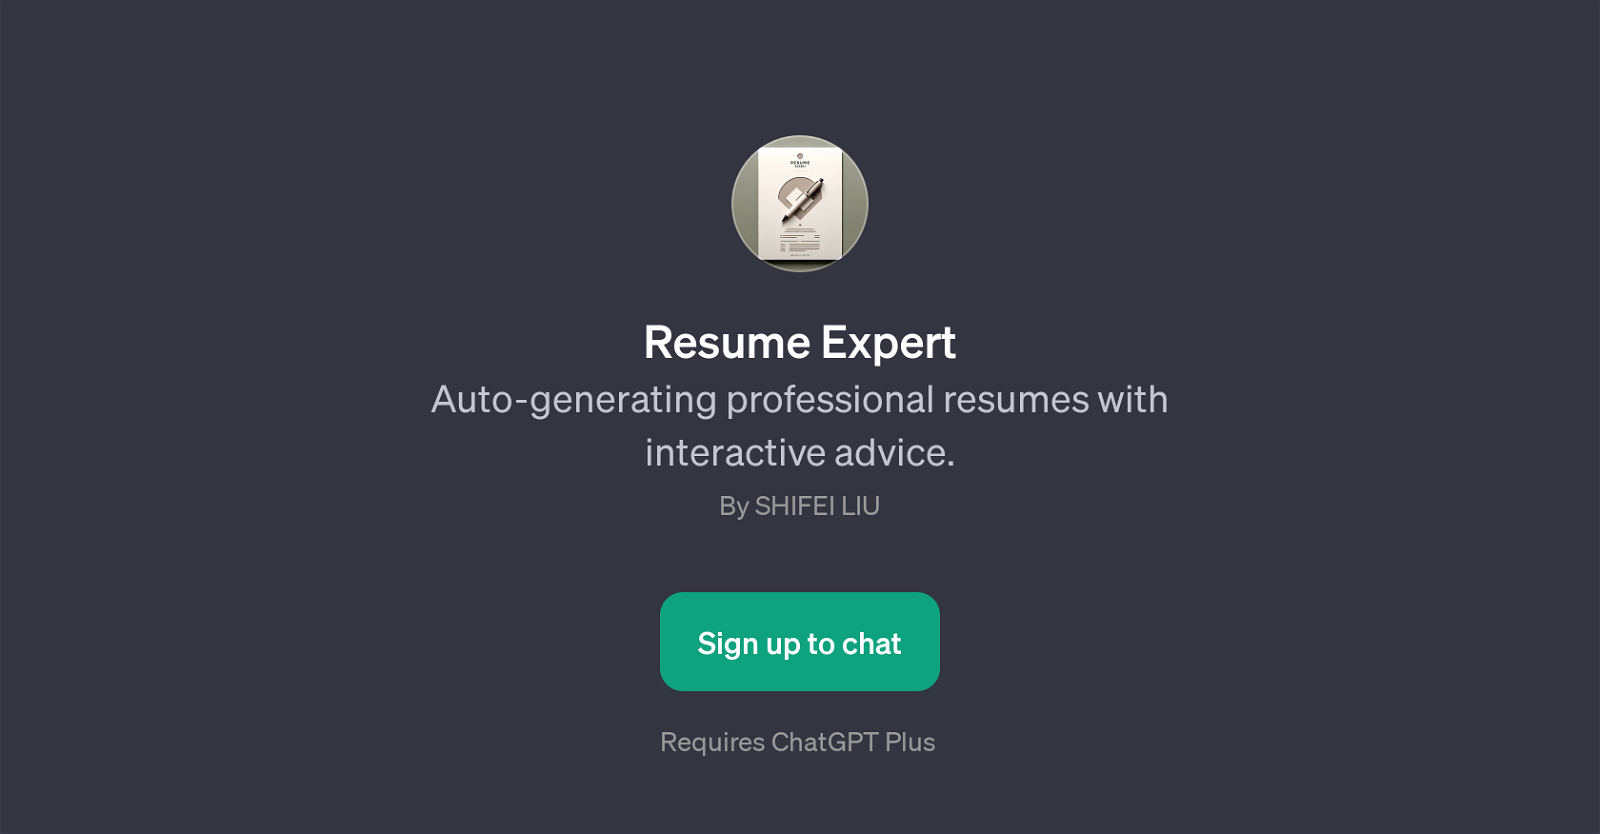 Resume Expert website